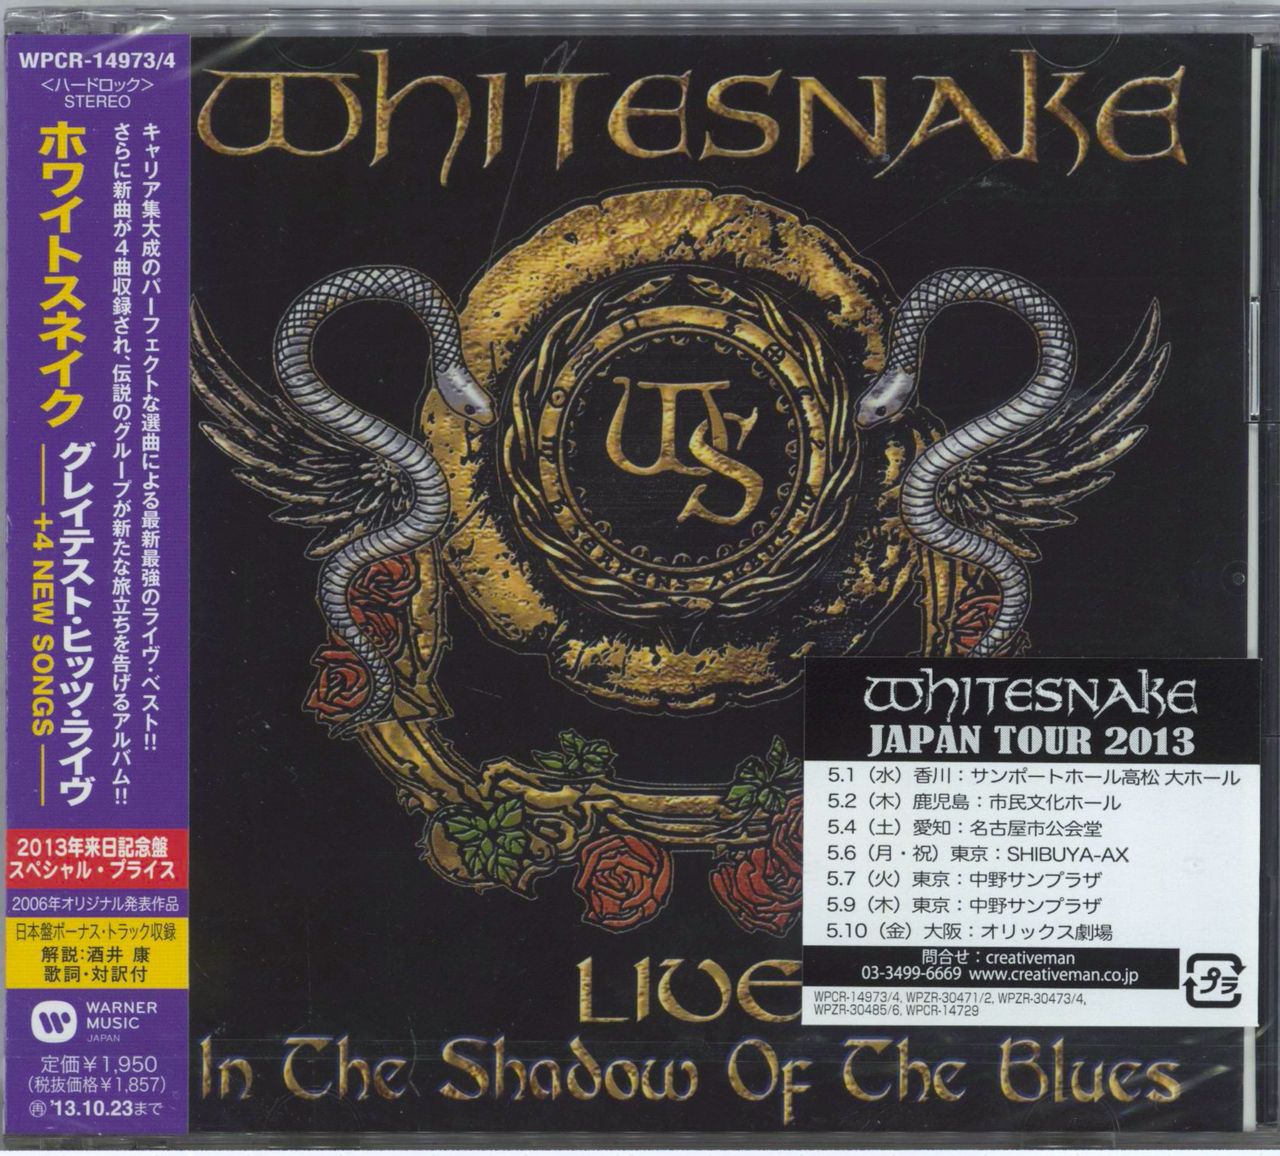 Whitesnake Live: In The Shadow Of The Blues Japanese 2-CD album